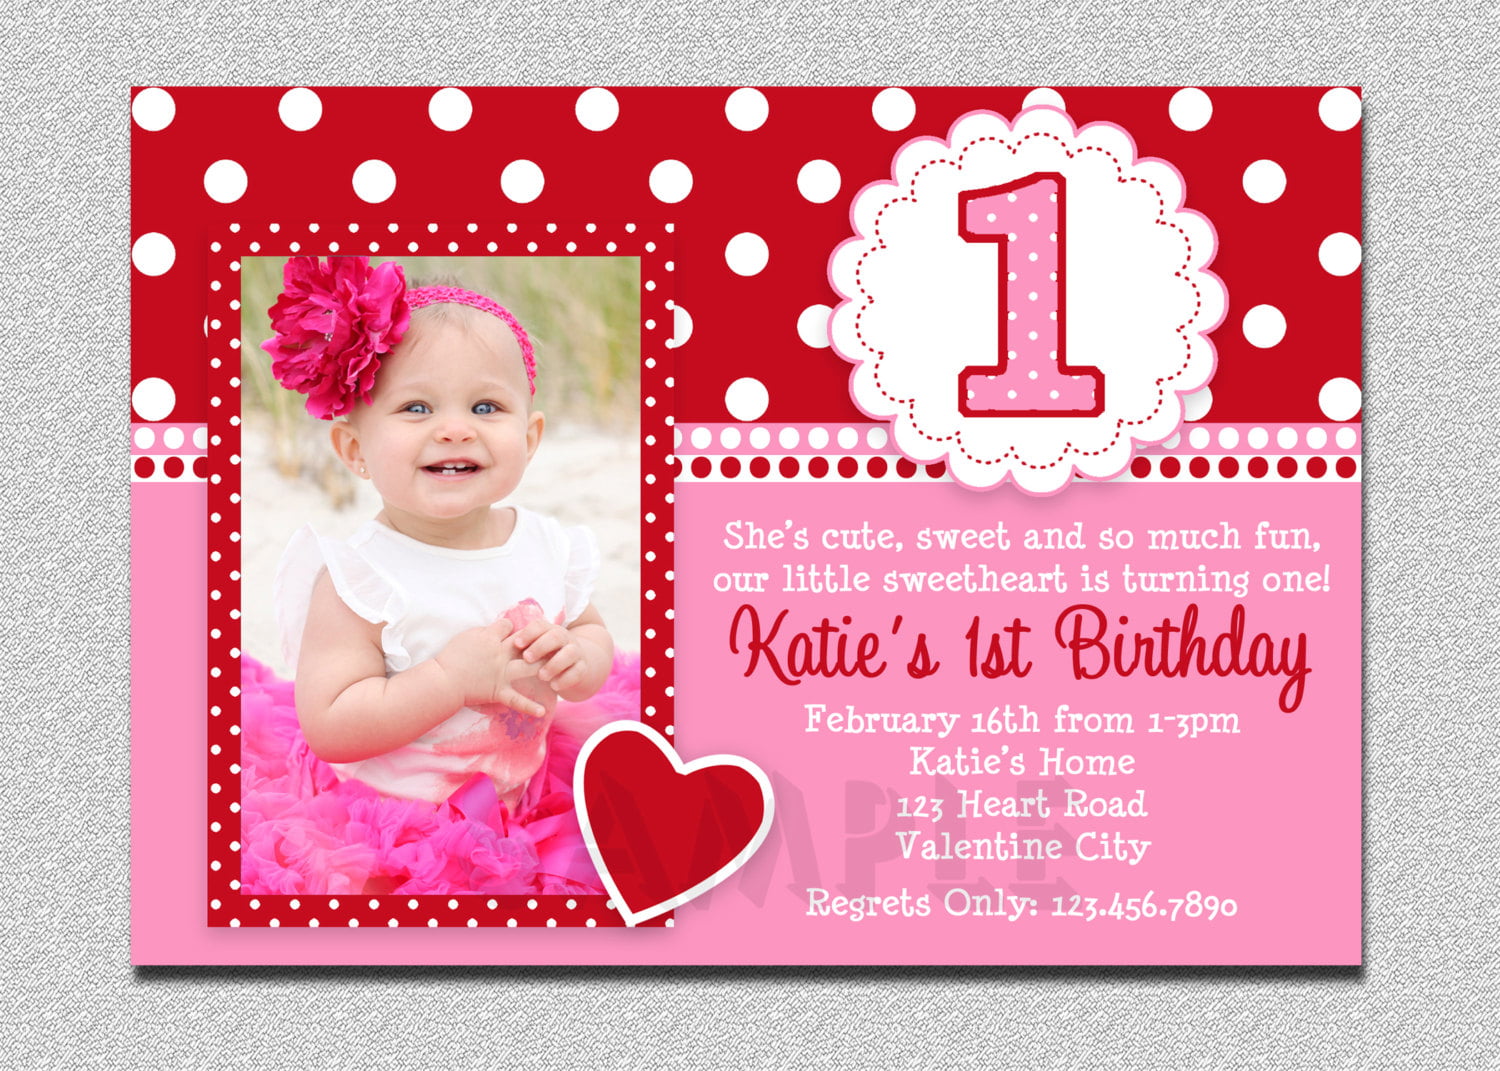 create-1st-birthday-invitation-card-for-free-birthdaybuzz